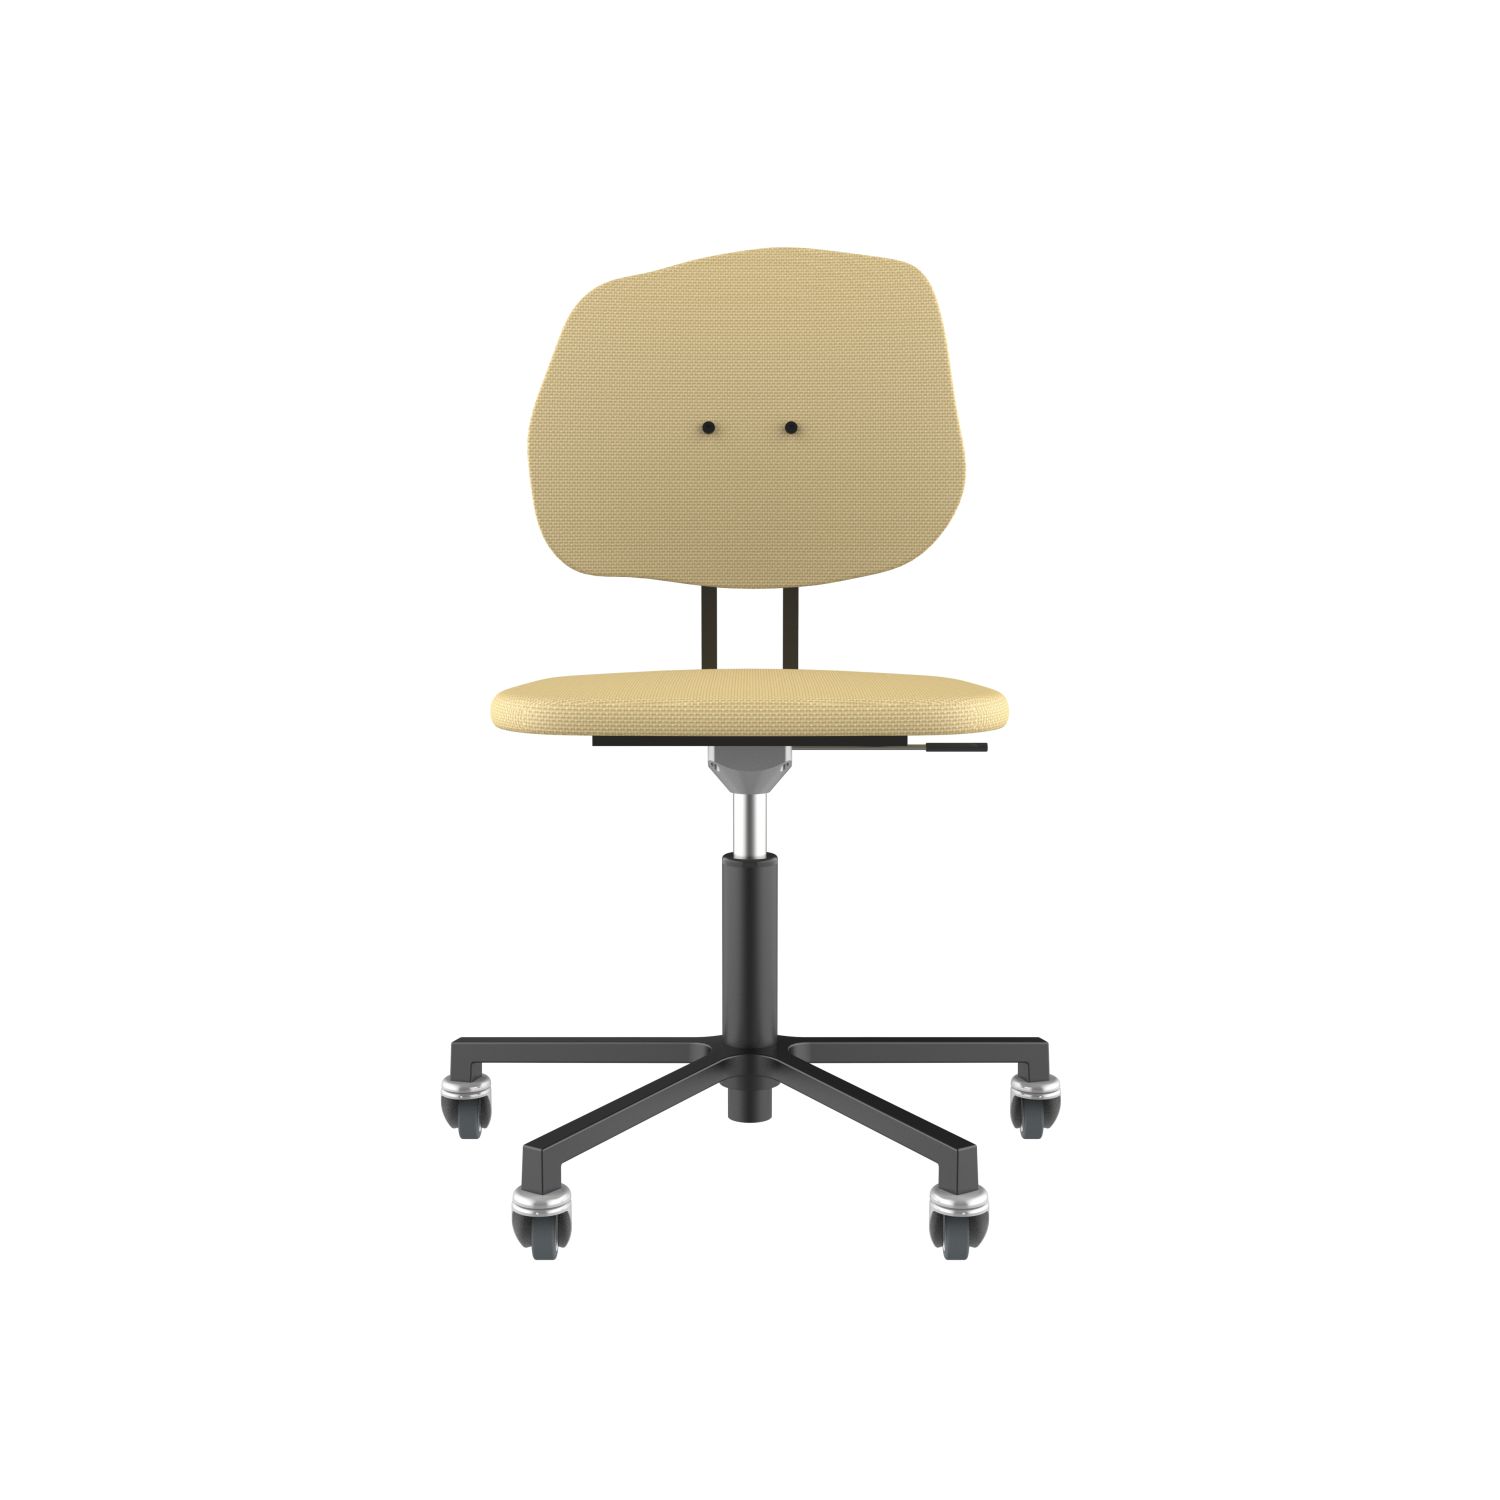 lensvelt maarten baas office chair without armrests backrest g light brown 141 black ral9005 soft wheels